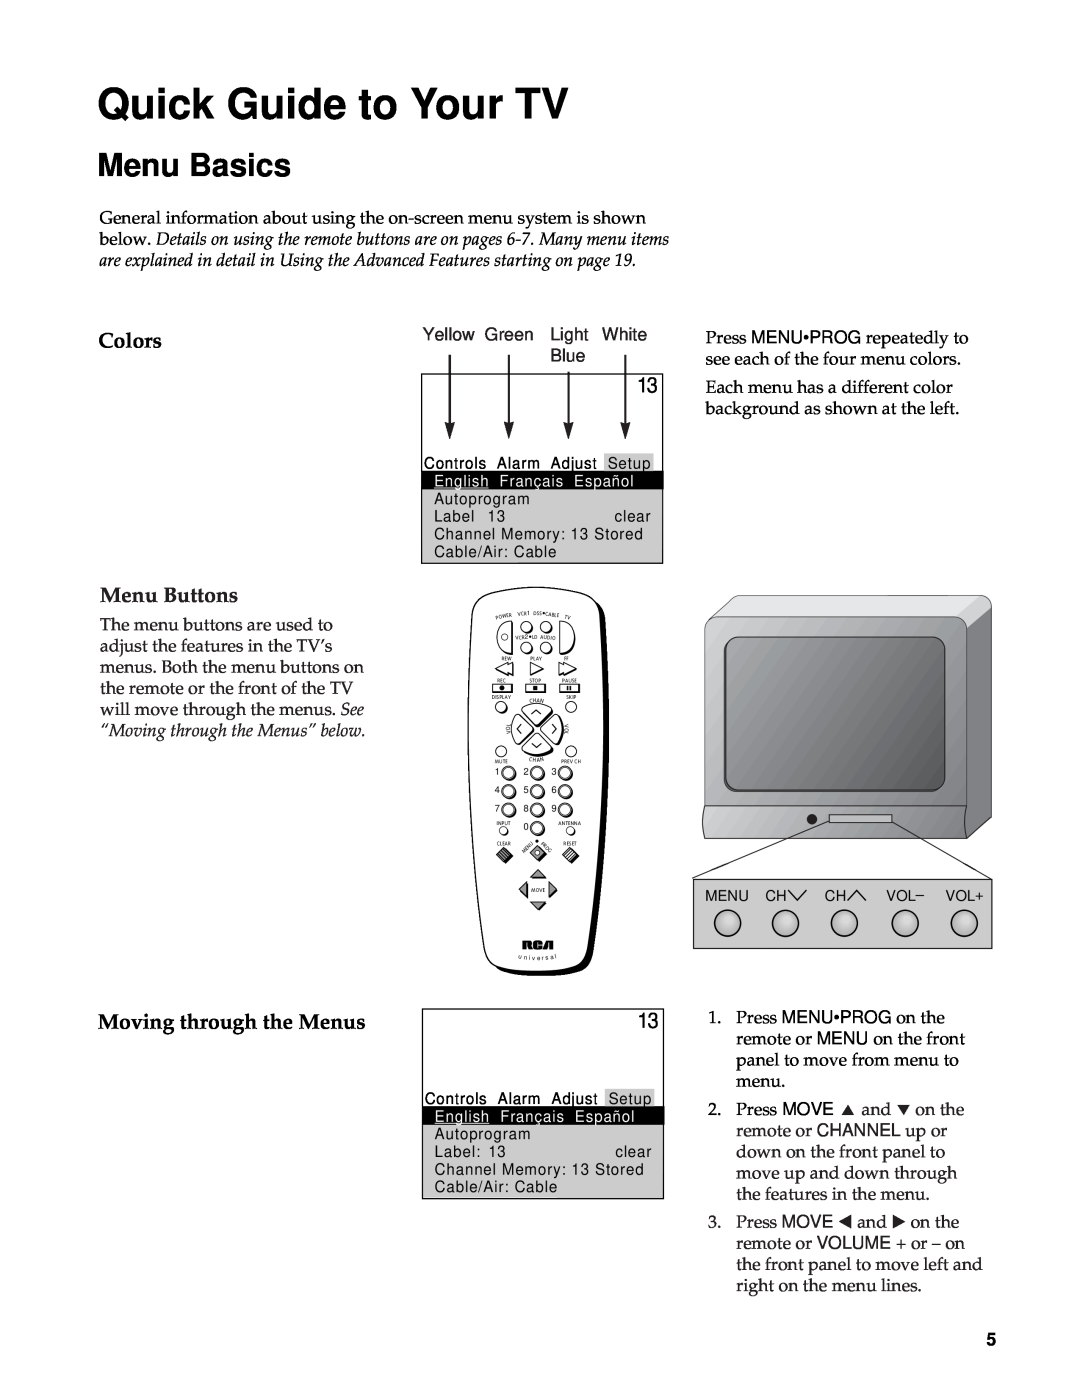 RCA Color TV manual Menu Basics, Colors, Moving through the Menus, Quick Guide to Your TV, Menu Buttons 